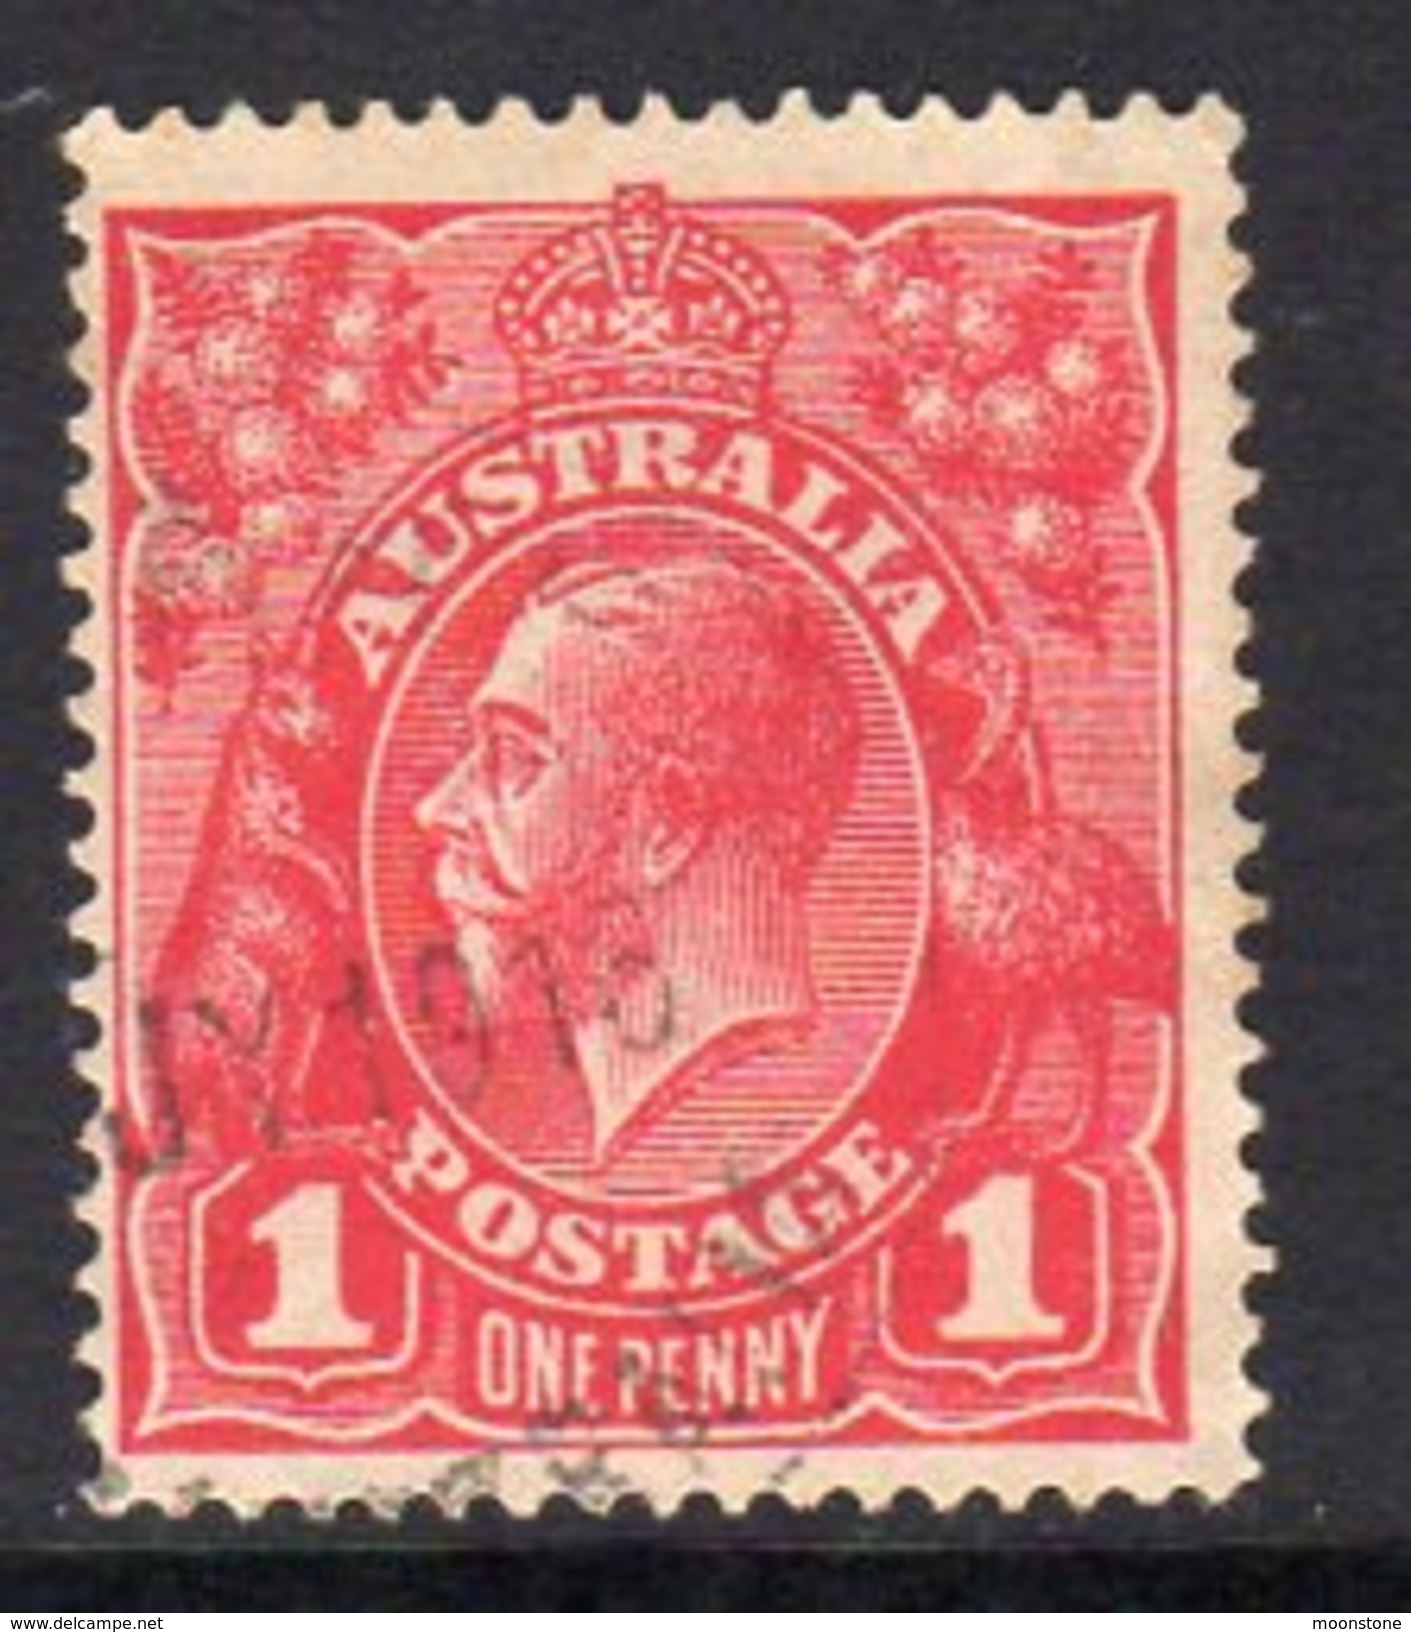 Australia 1914-20  1d Carmine-red GV Head, 2nd Wmk., Used, (SG 21) - Used Stamps